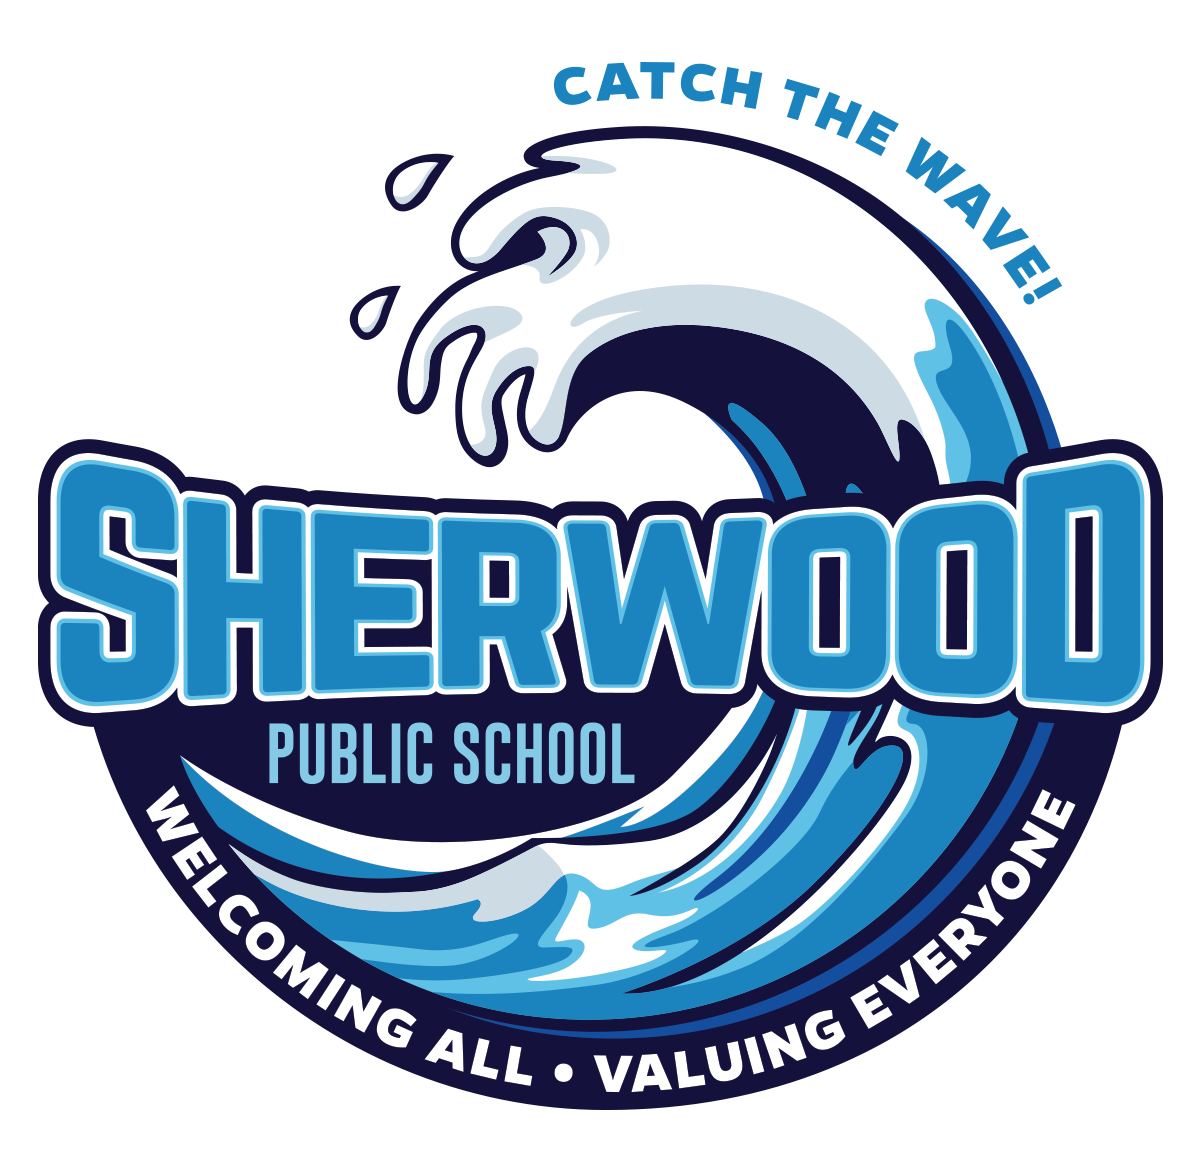 Sherwood Public School logo